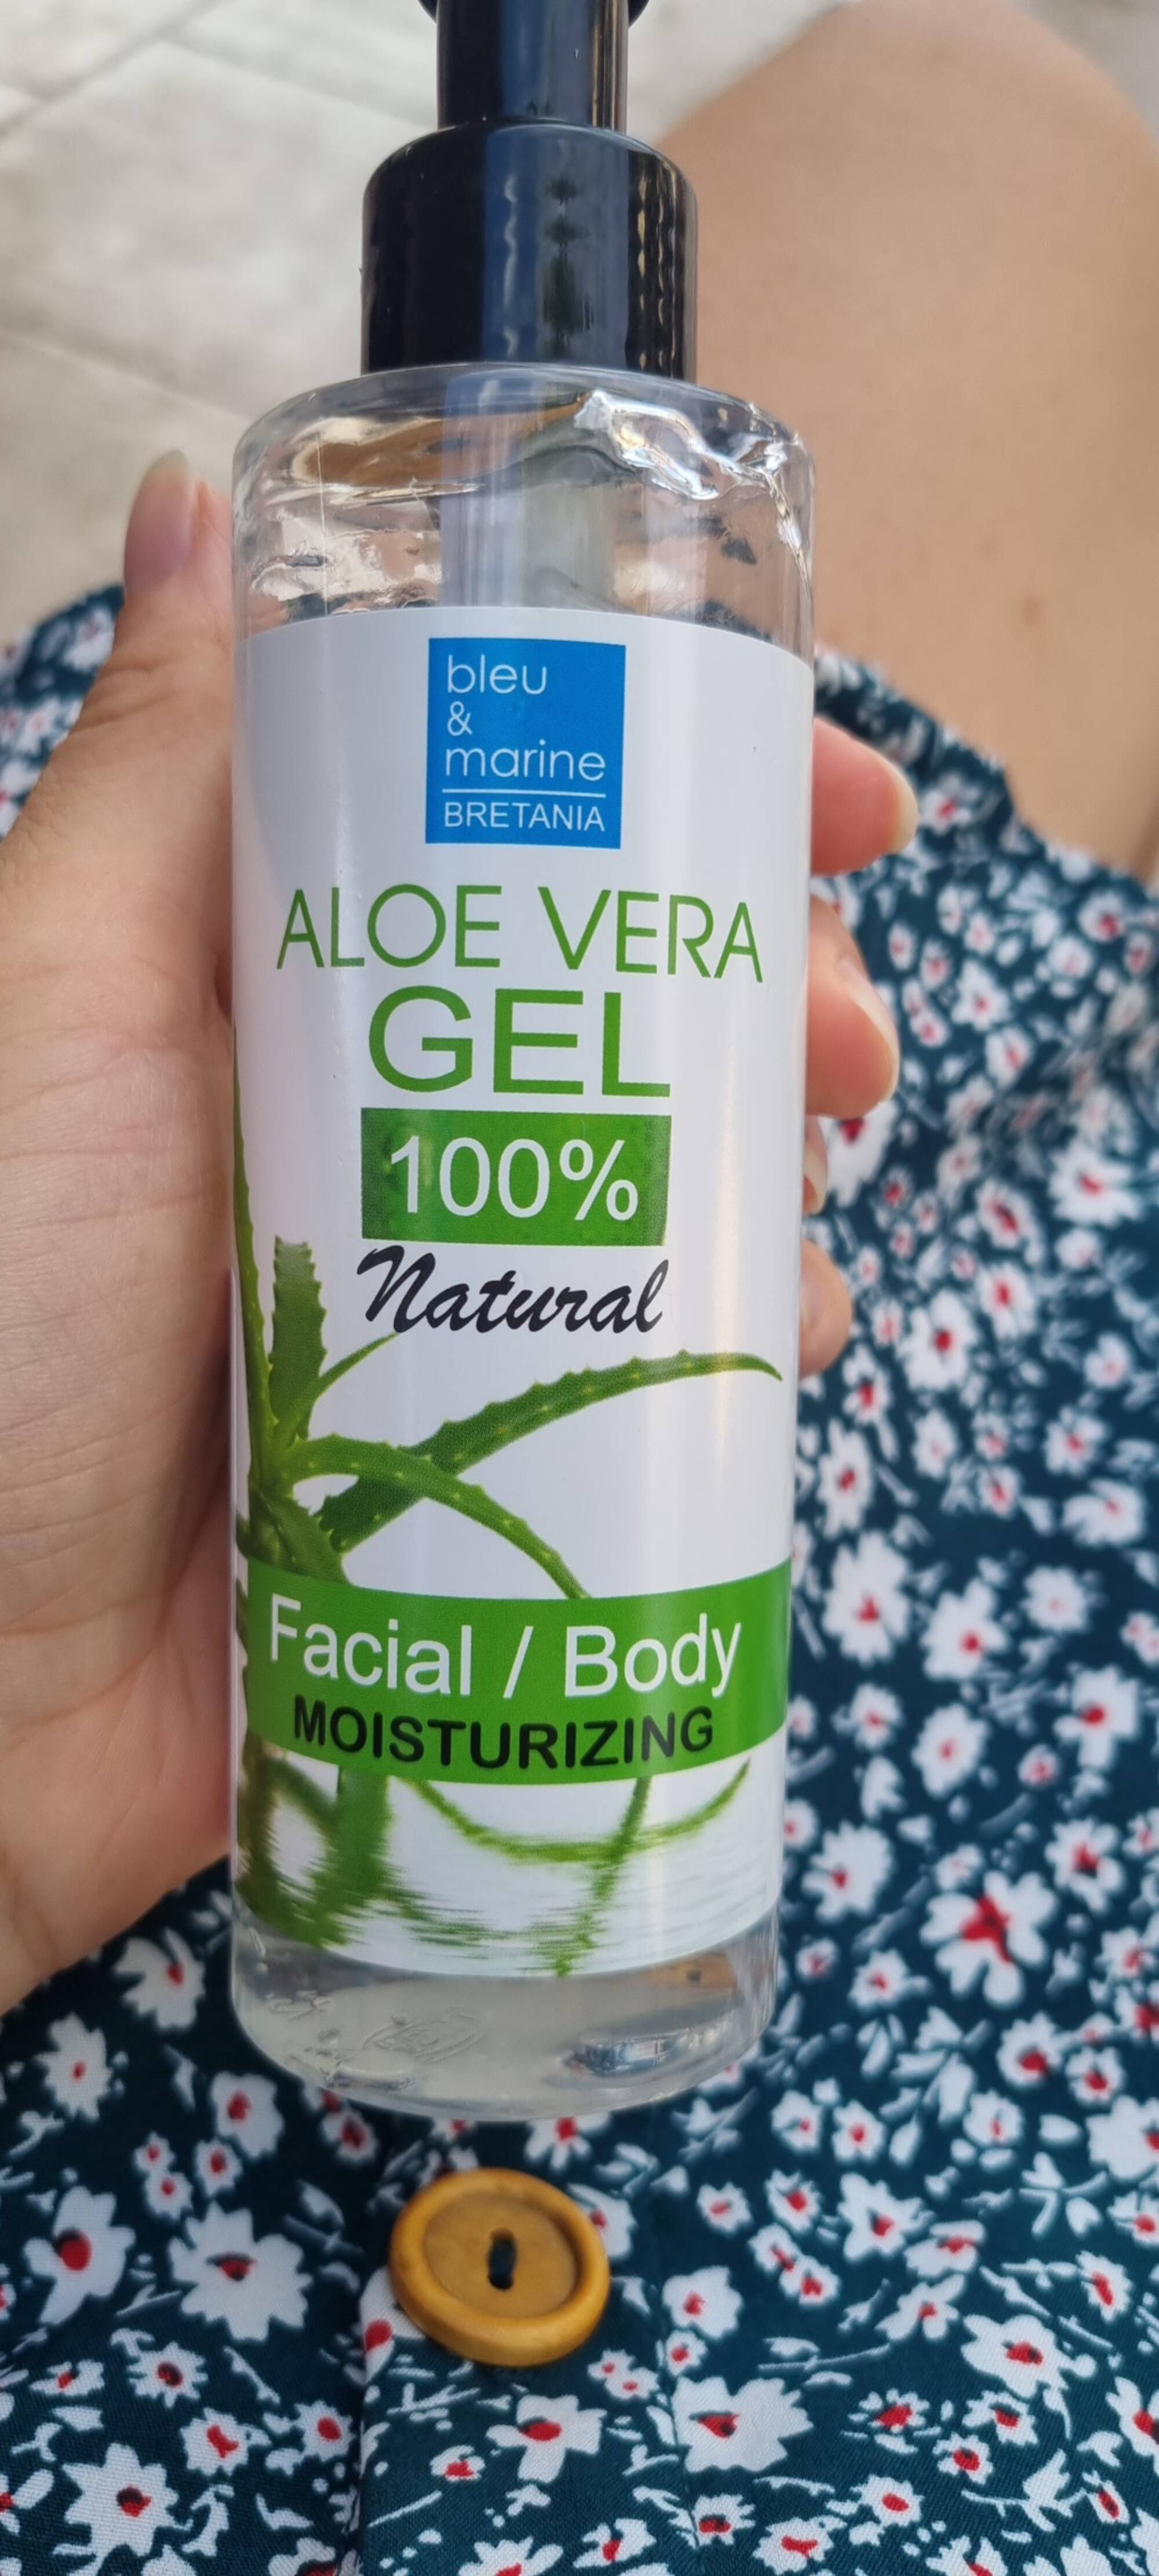 BLEU & MARINE BRETANIA - Aloe Vera gel - Facial body moisturizing